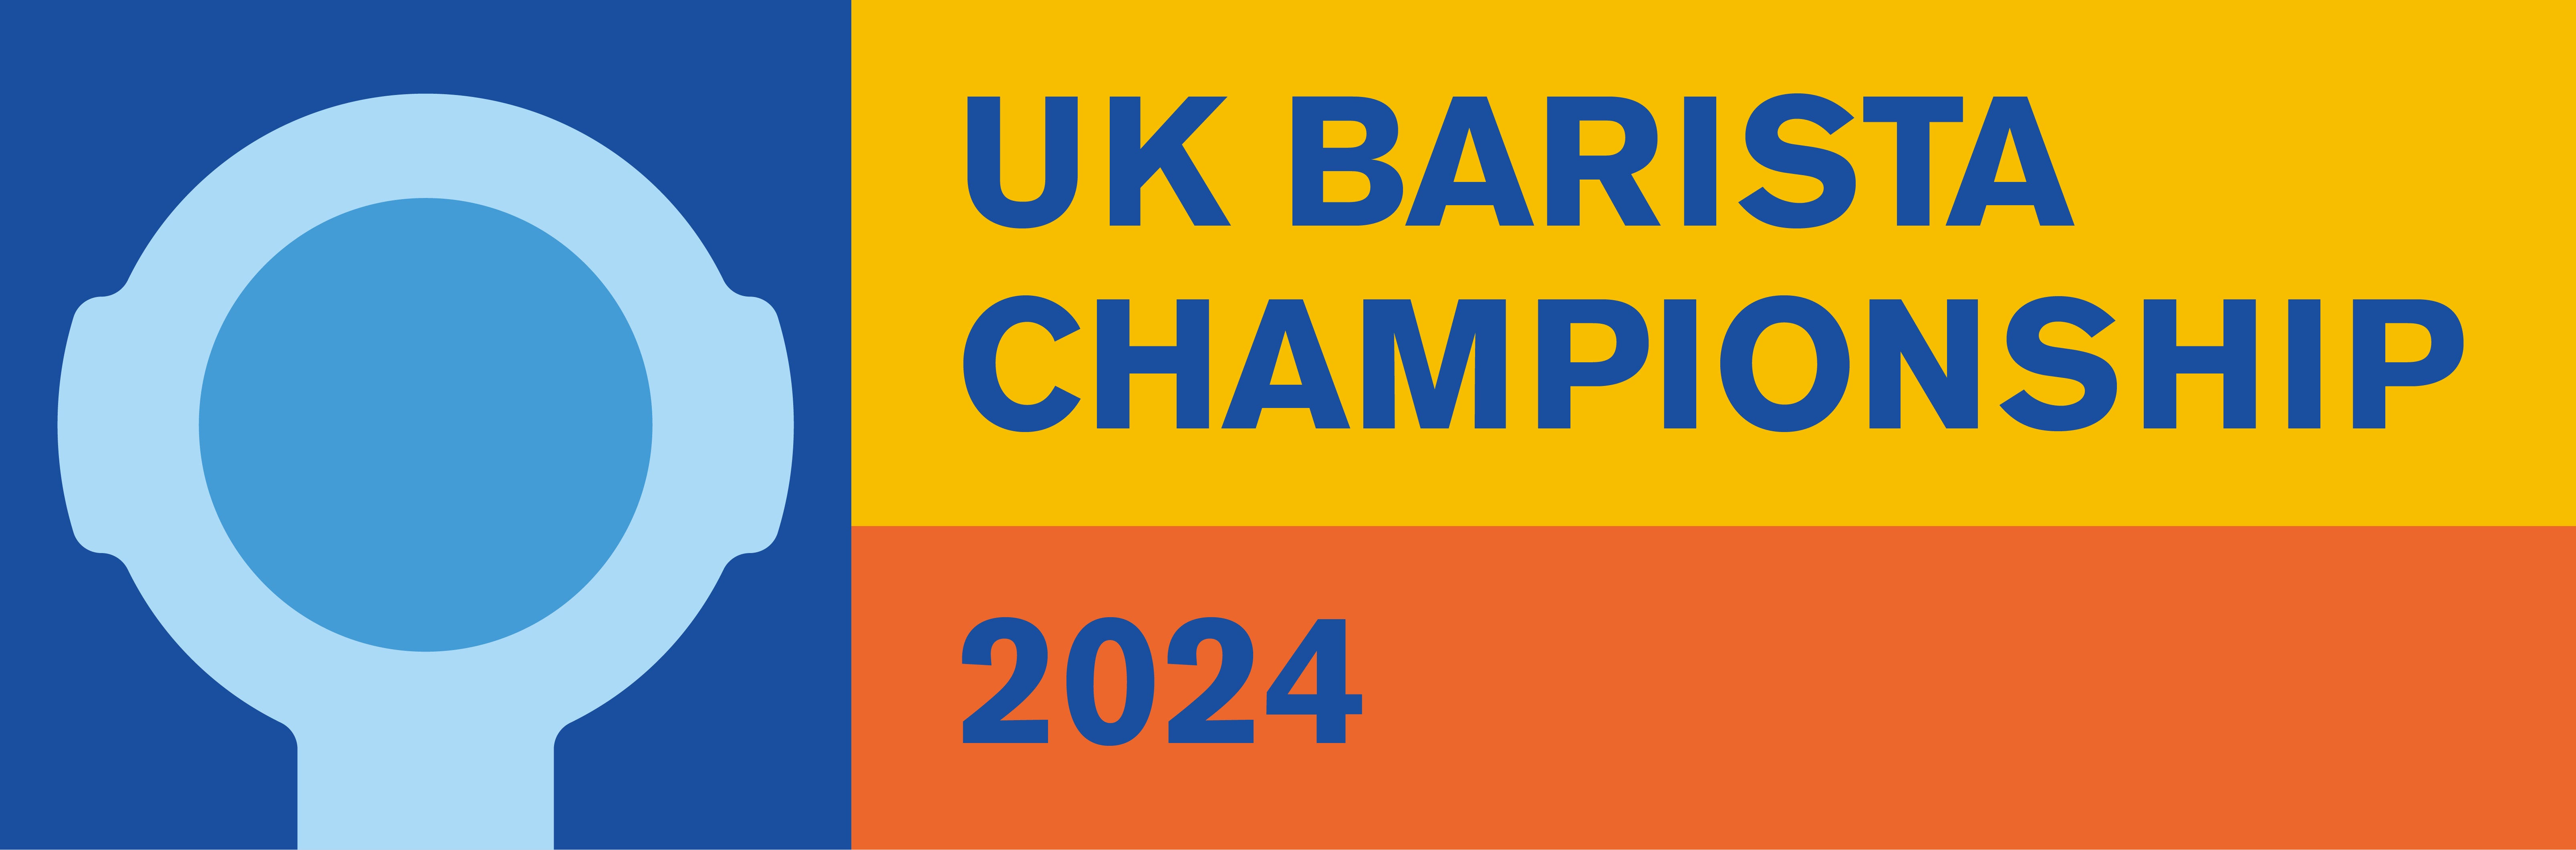 UK Barista Championship 2024